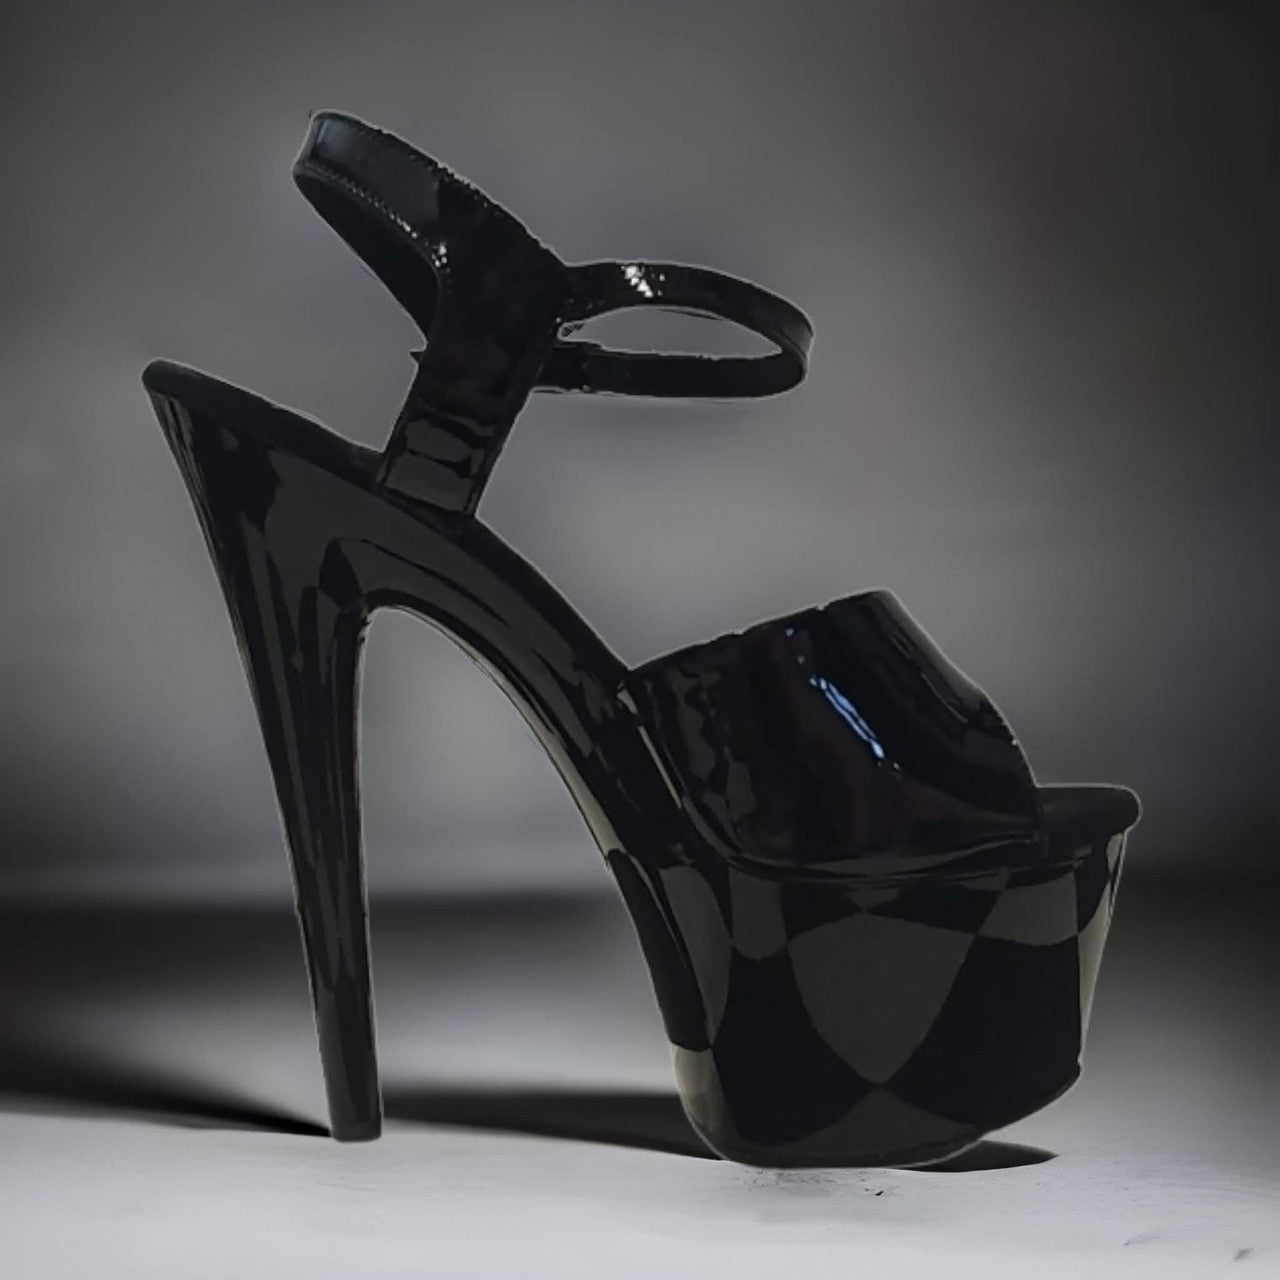 Black Patent Platform Stiletto Drag Pole Shoe